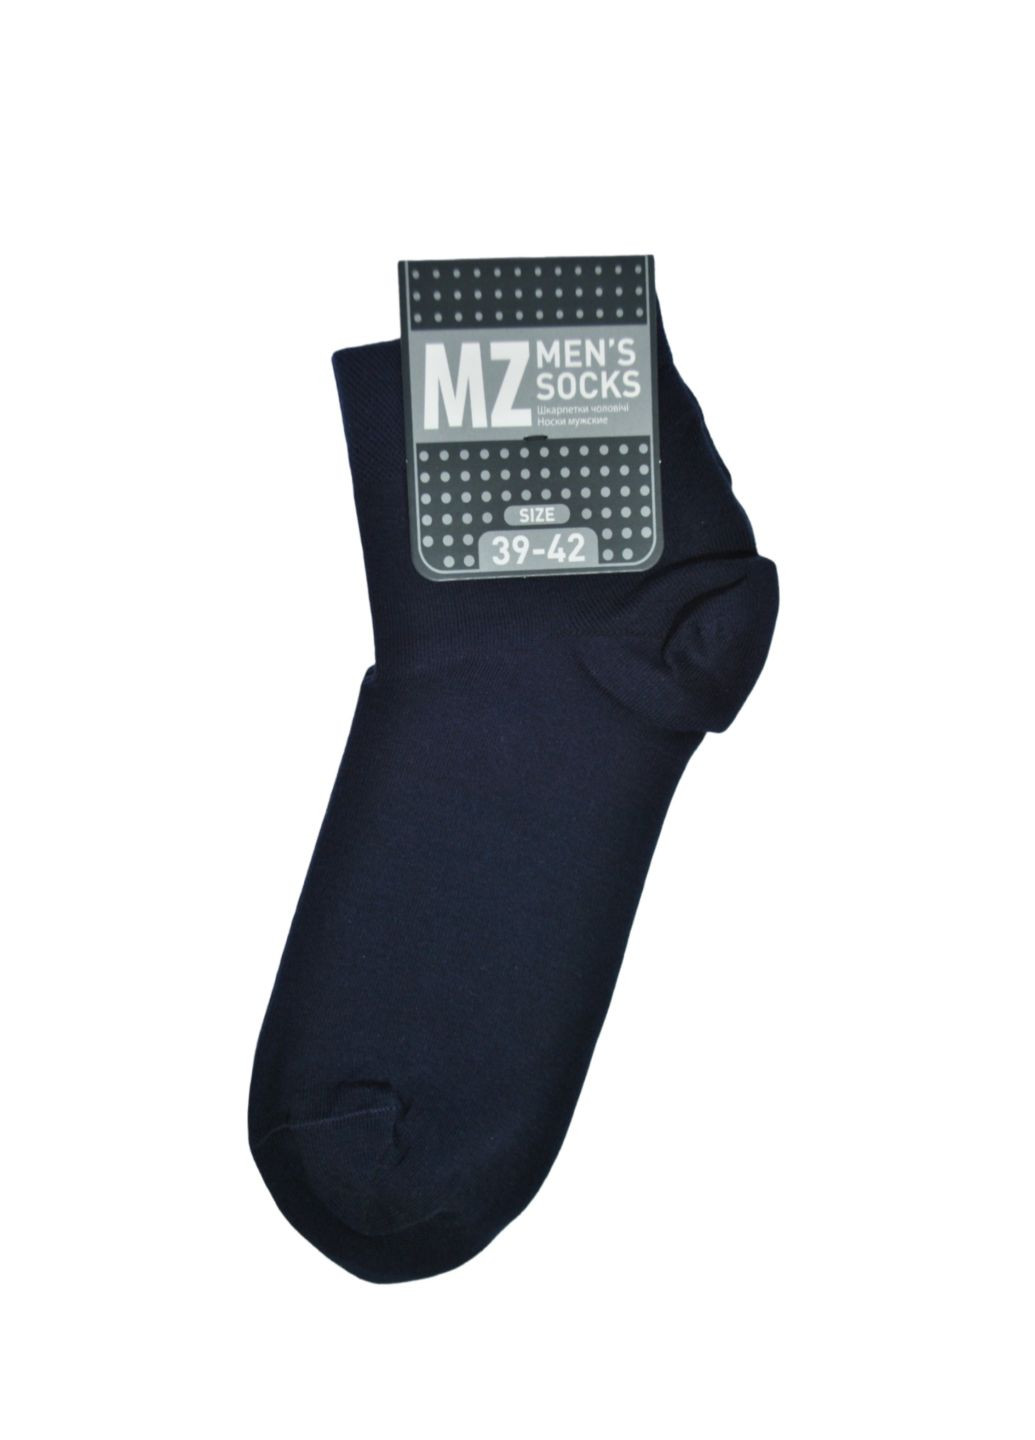 NTF Шкарпетки чол. (короткі) MS2C/Sl-cl, р.39-42, black. Набір (3 шт.) MZ ms2c_sl-cl (259038692)